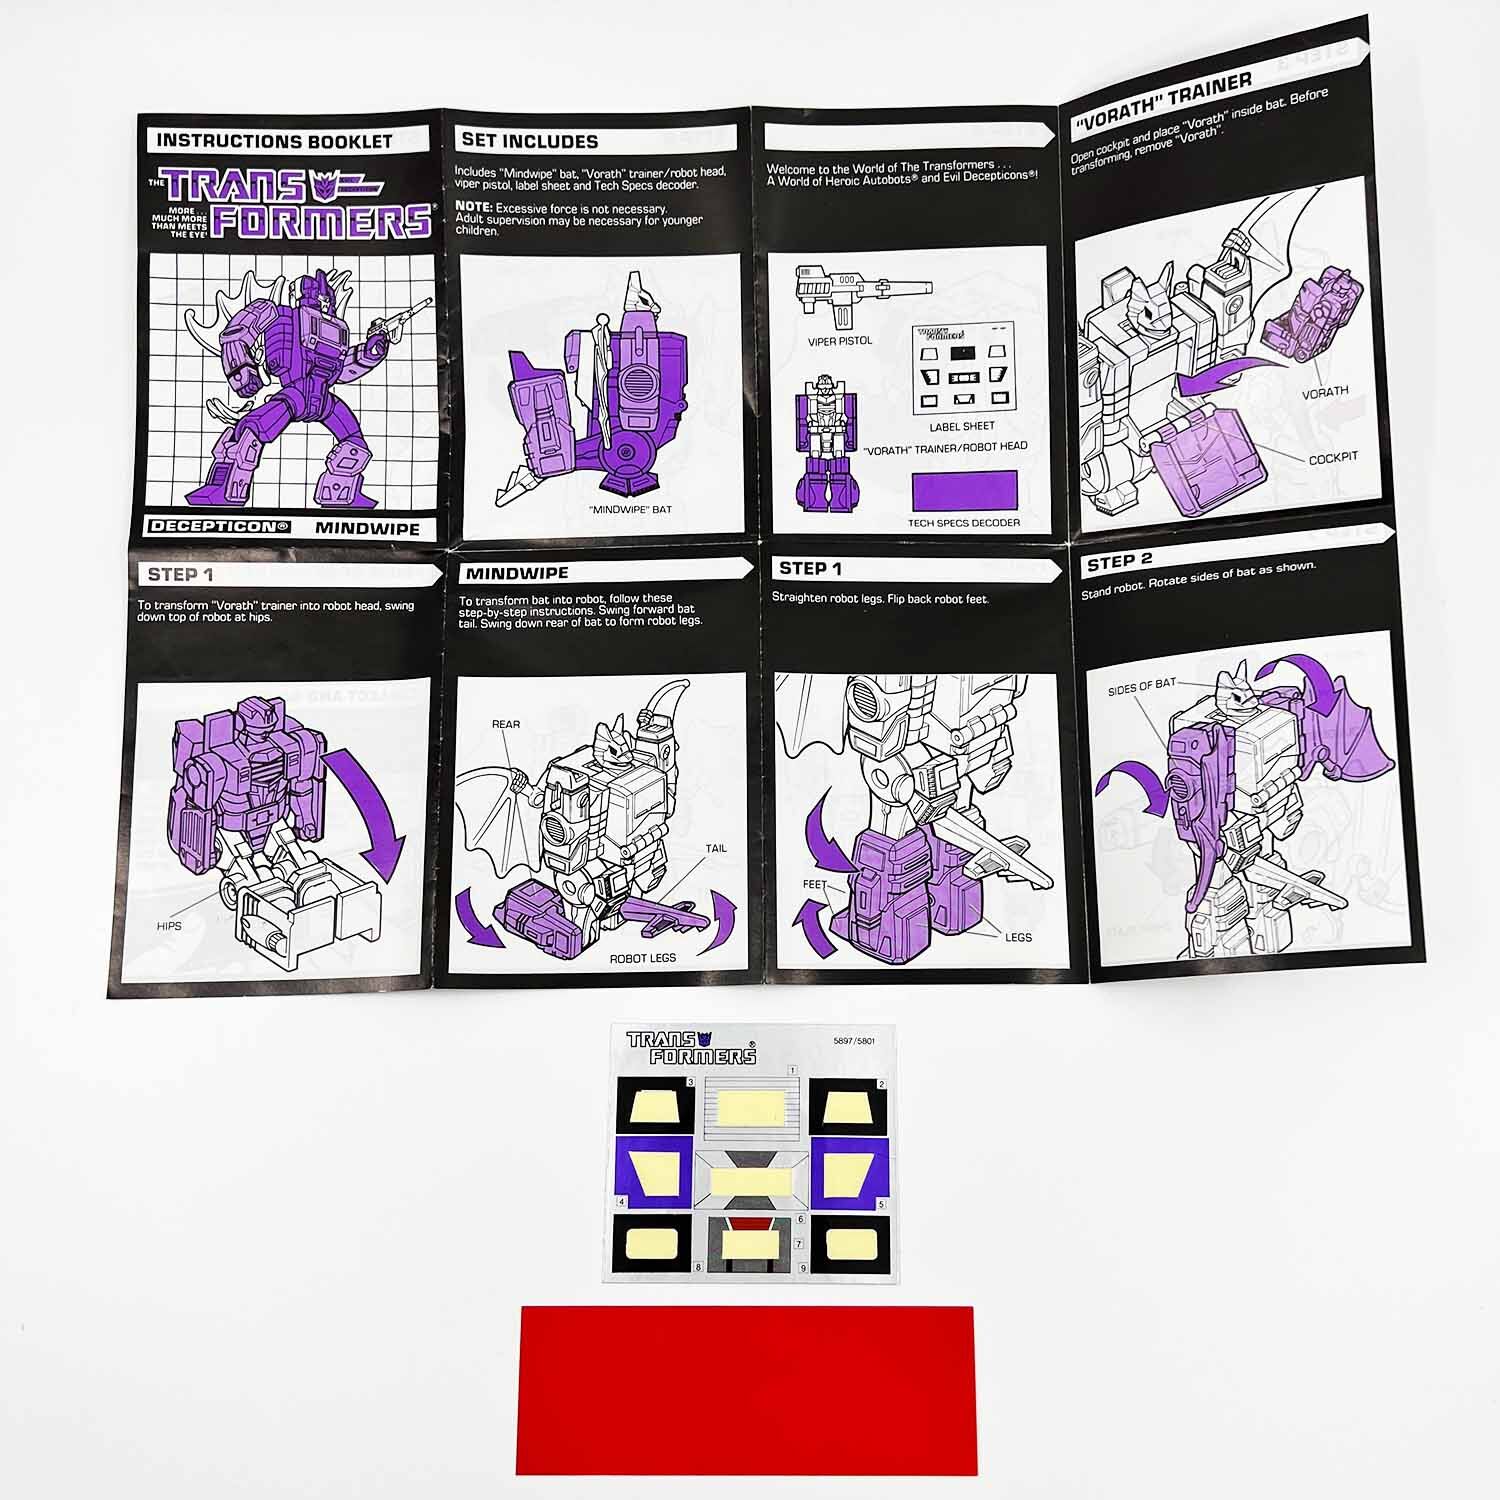 Headmaster Mindwipe Decepticon Transformers G1 1986 with Box